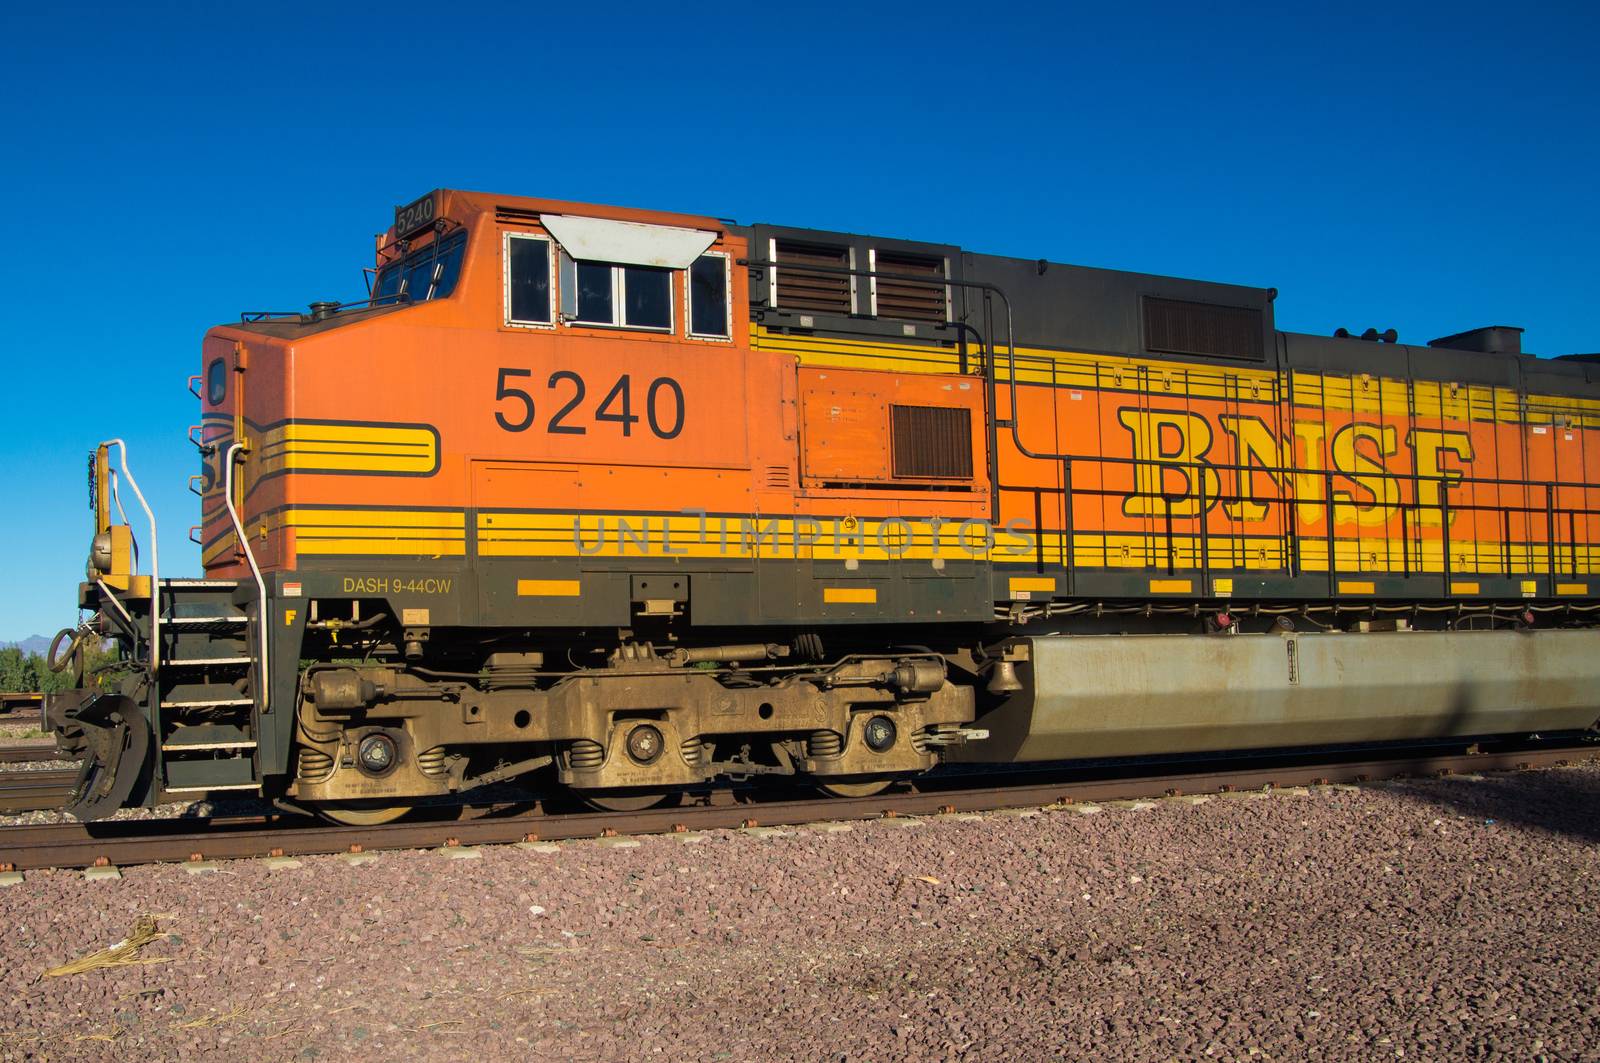 Stationary BNSF Freight Train Locomotive No. 5240 by emattil